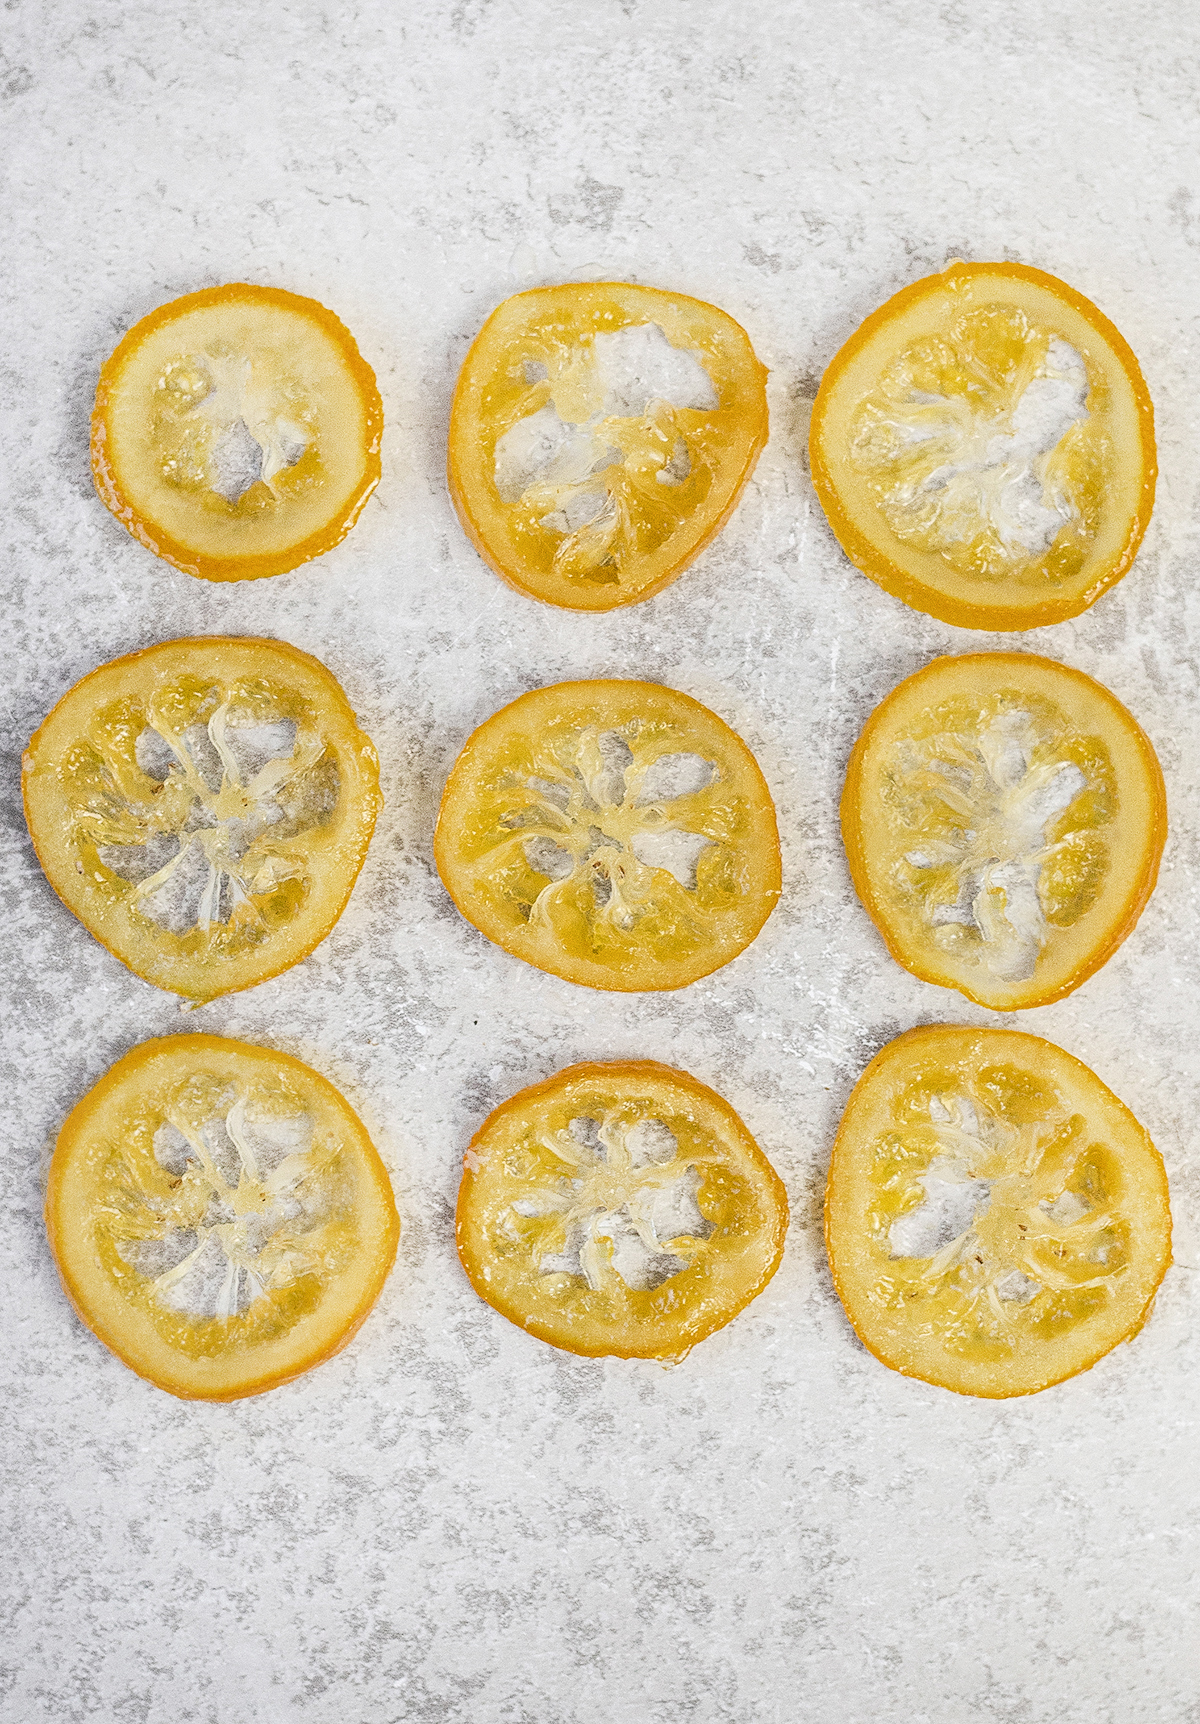 Candied Lemon Slices